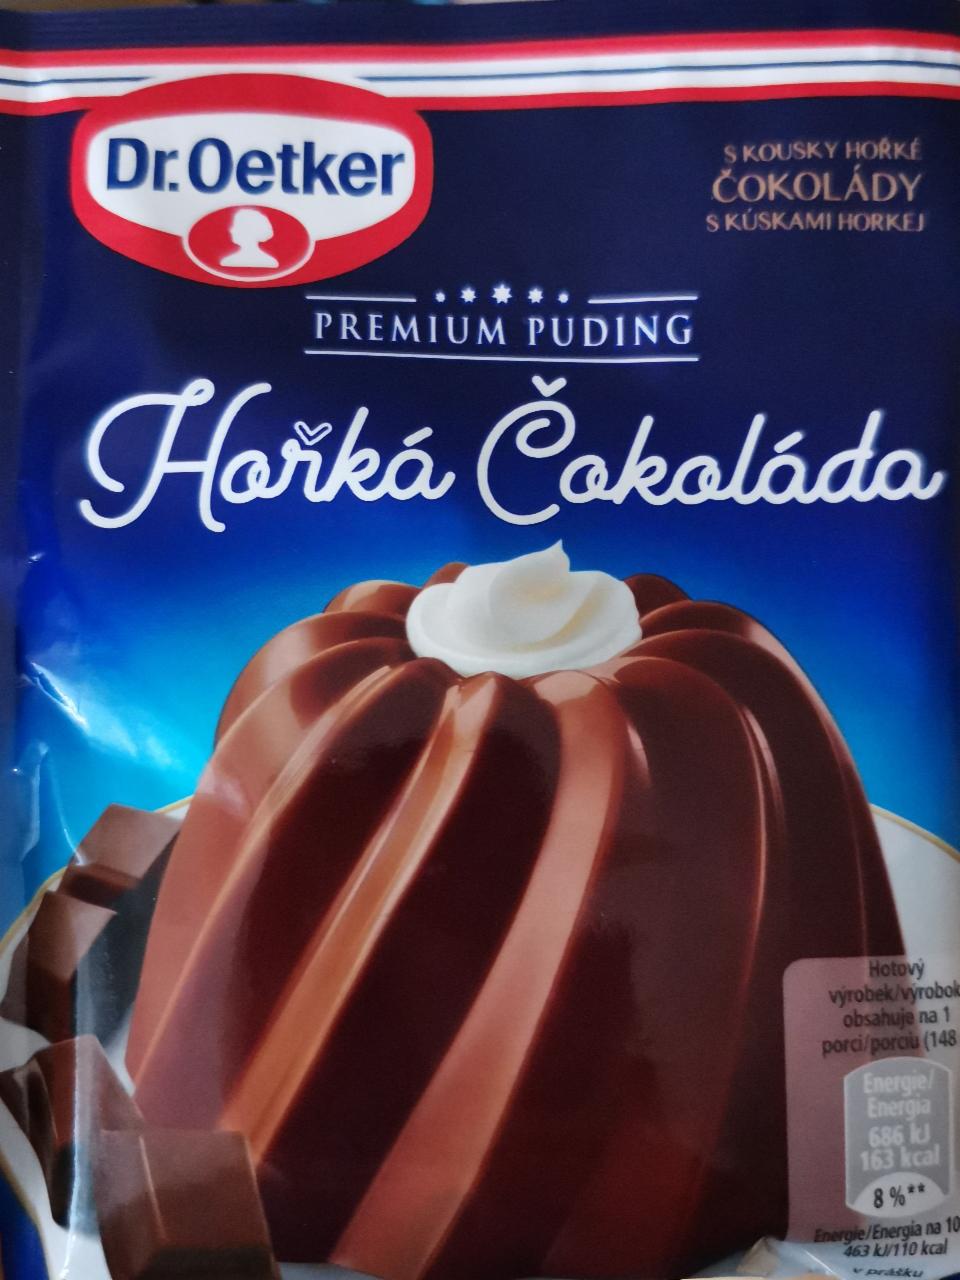 Fotografie - Premium Puding Hořká čokoláda s kousky hořké čokolády Dr.Oetker